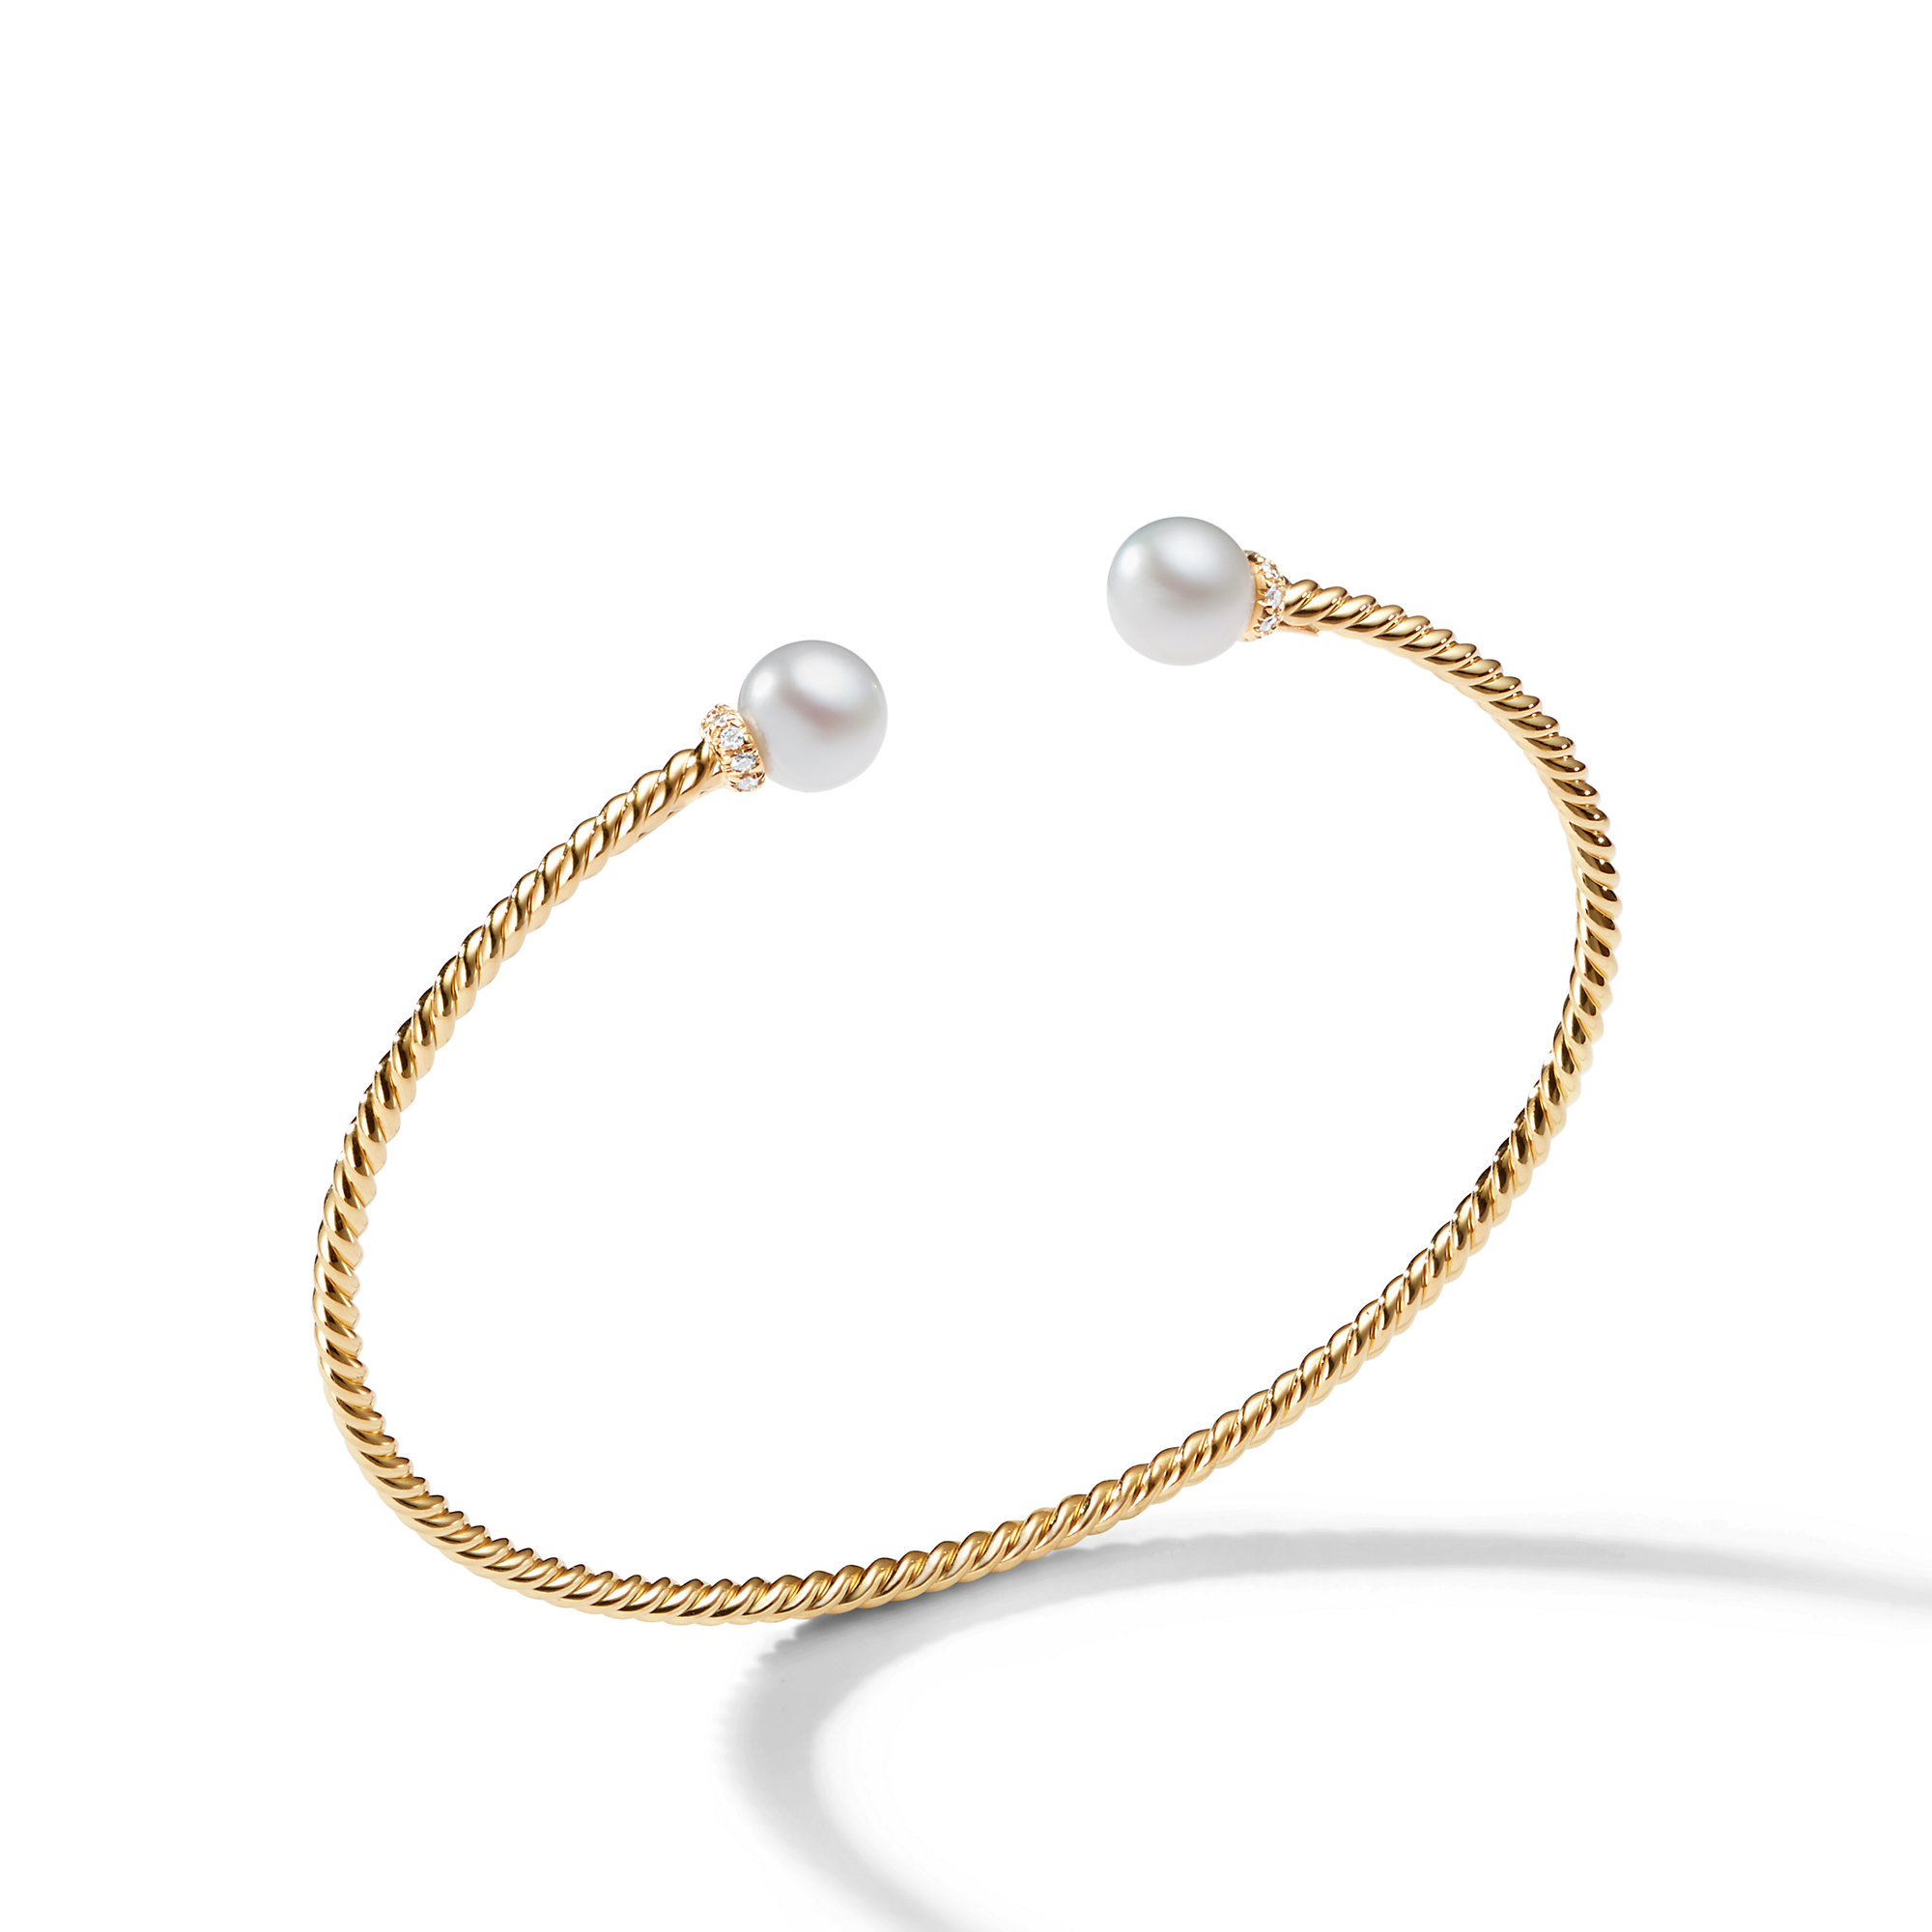 Petite Solari Pearl Bracelet in 18K Yellow Gold with Pave Diamonds